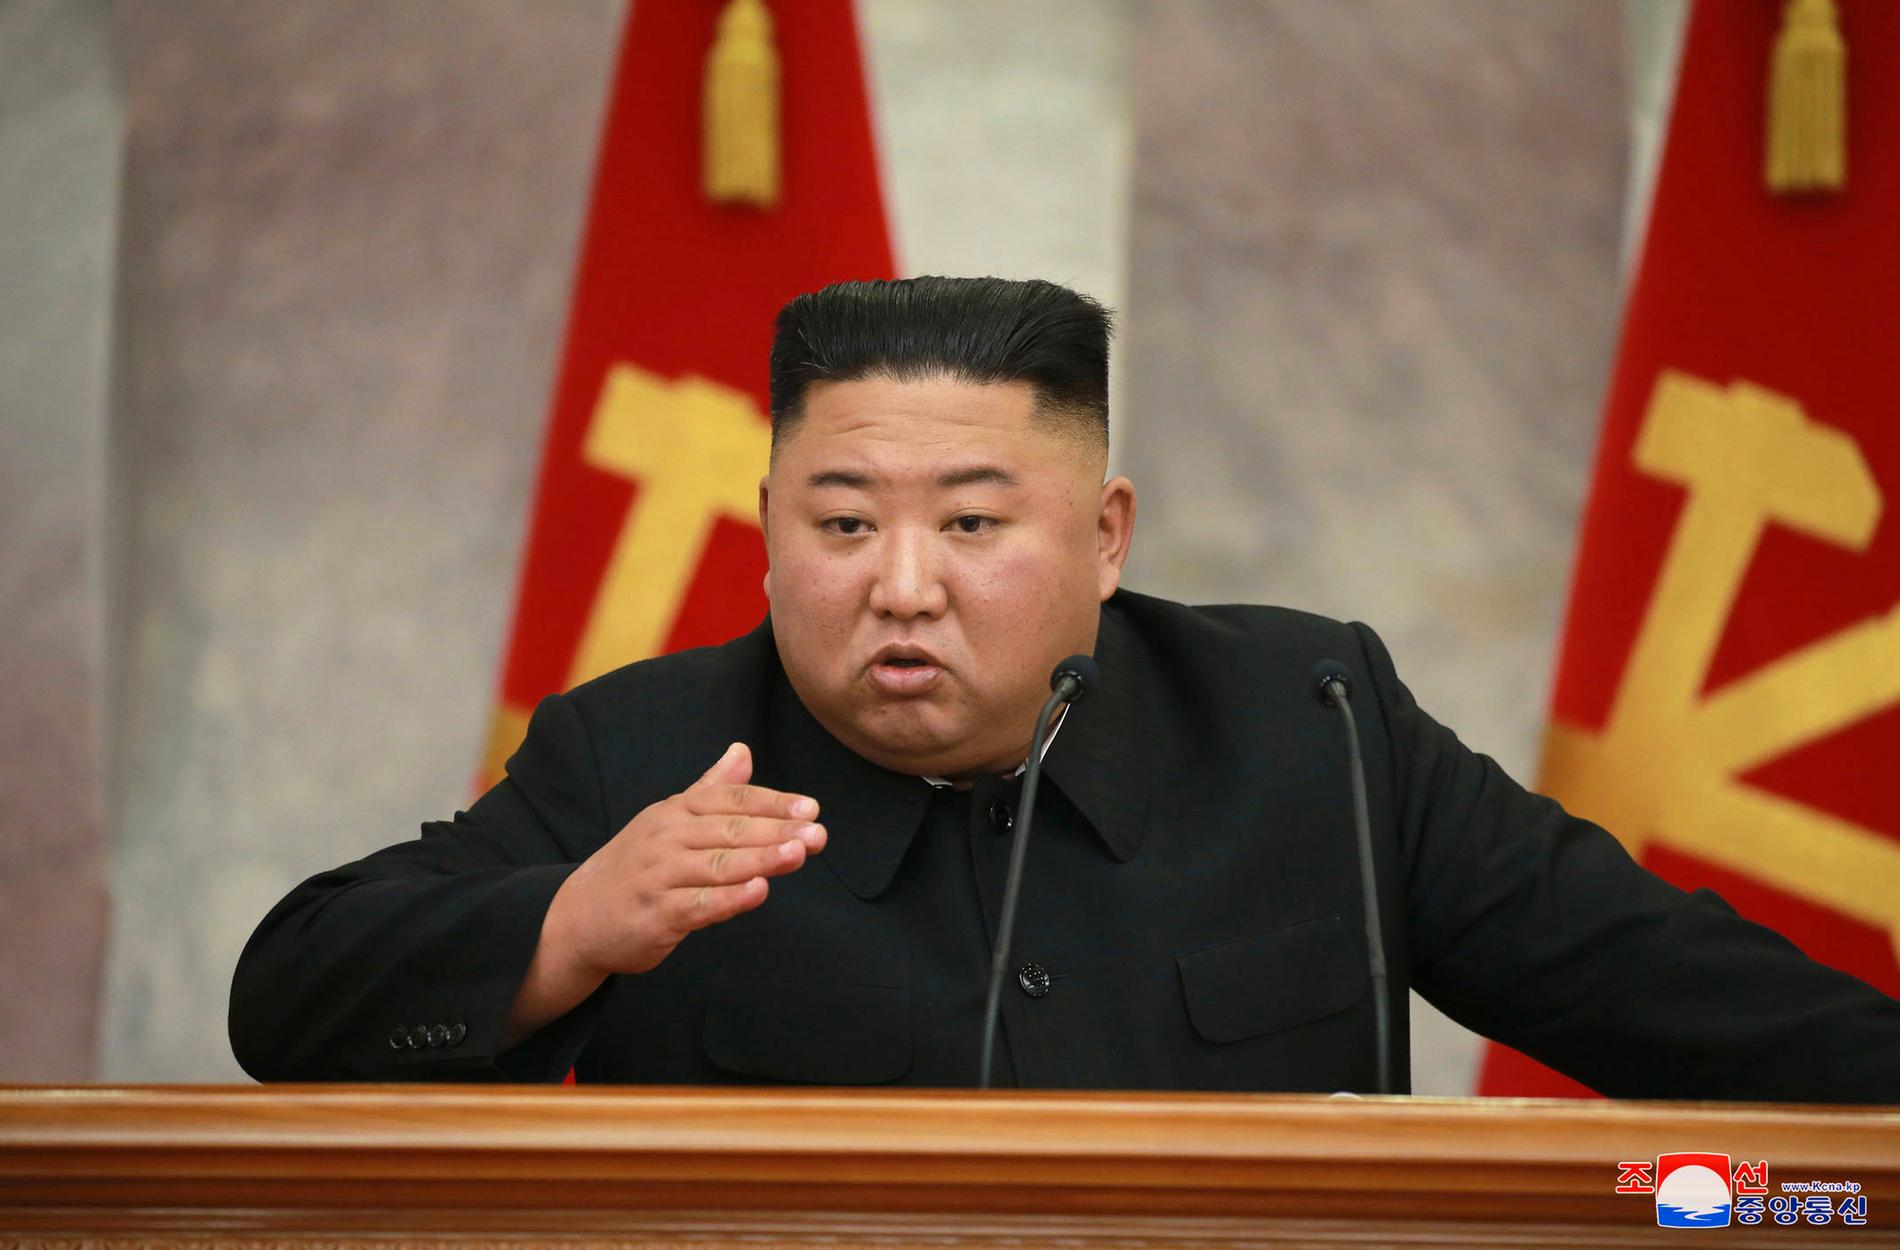 Nordkoreas ledare Kim Jong-Un under ett partimöte tidigare i juli.